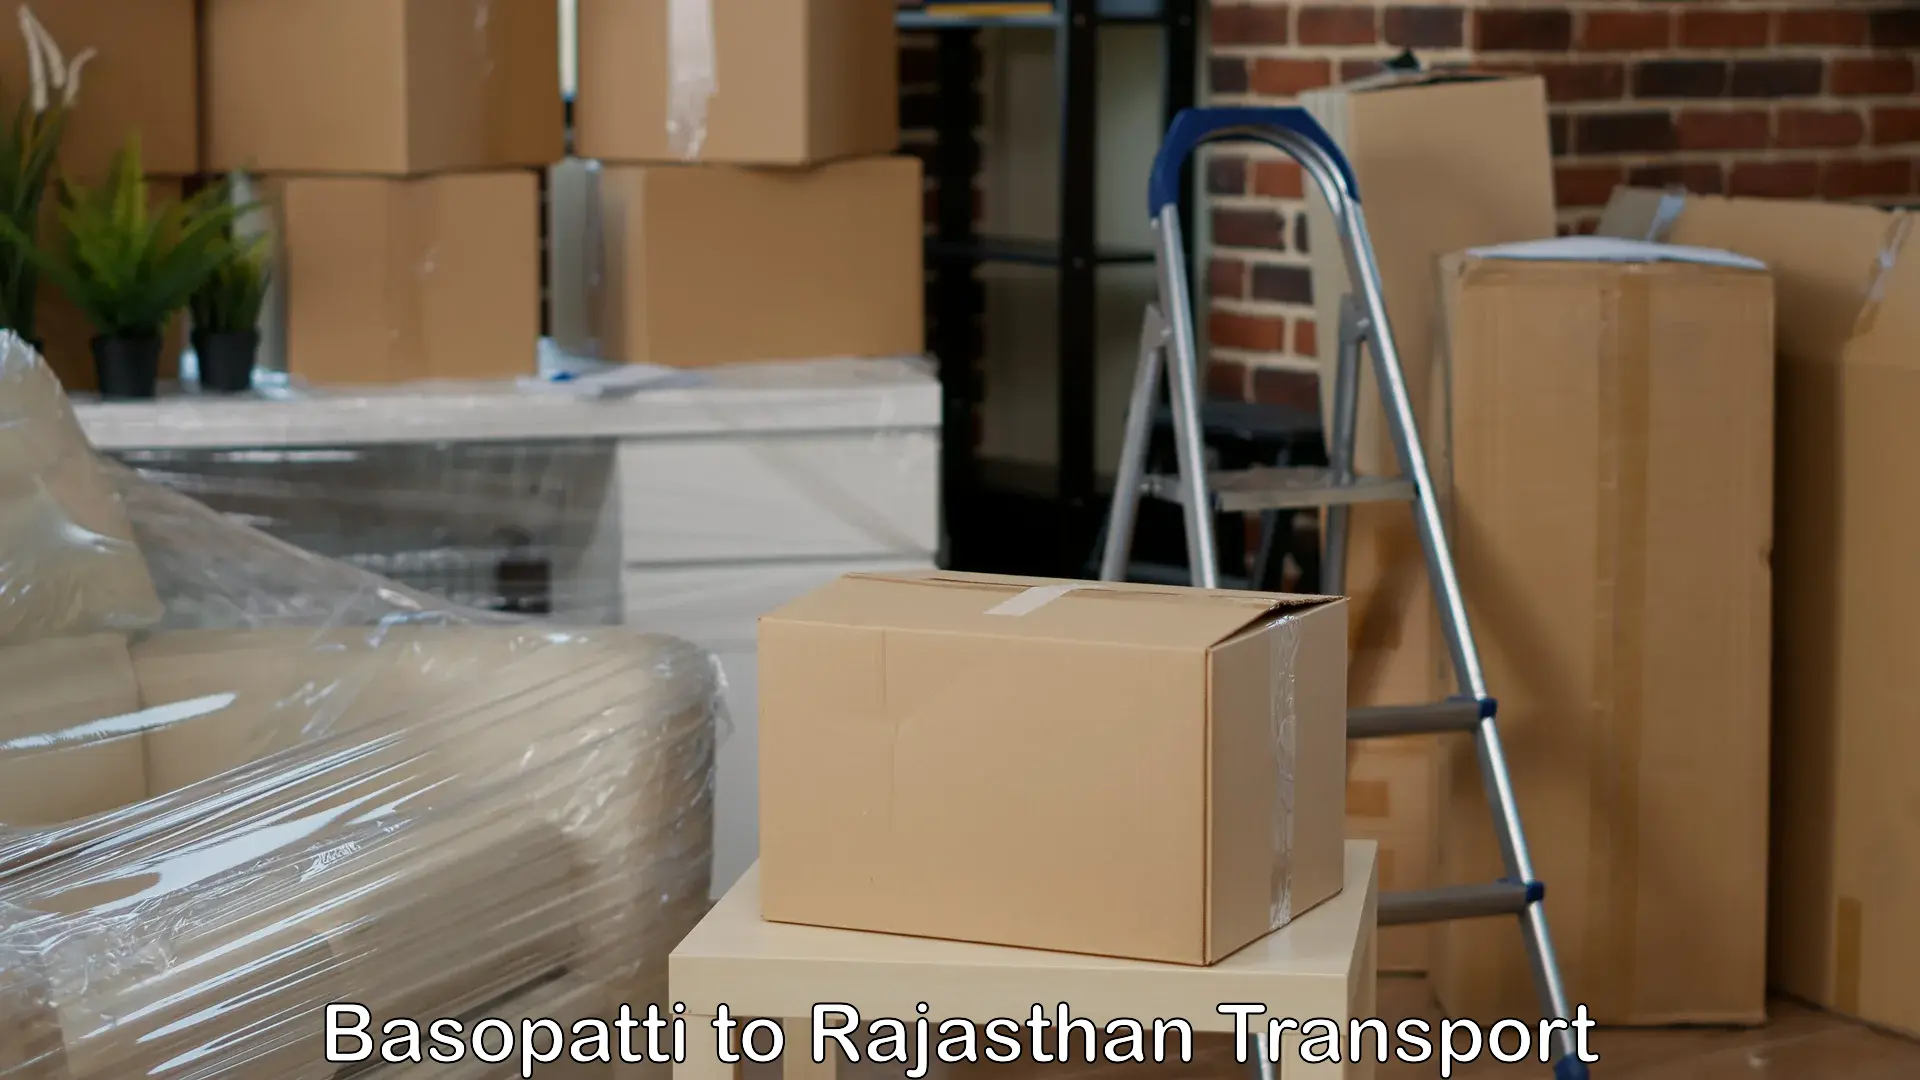 Shipping partner Basopatti to Sawai Madhopur